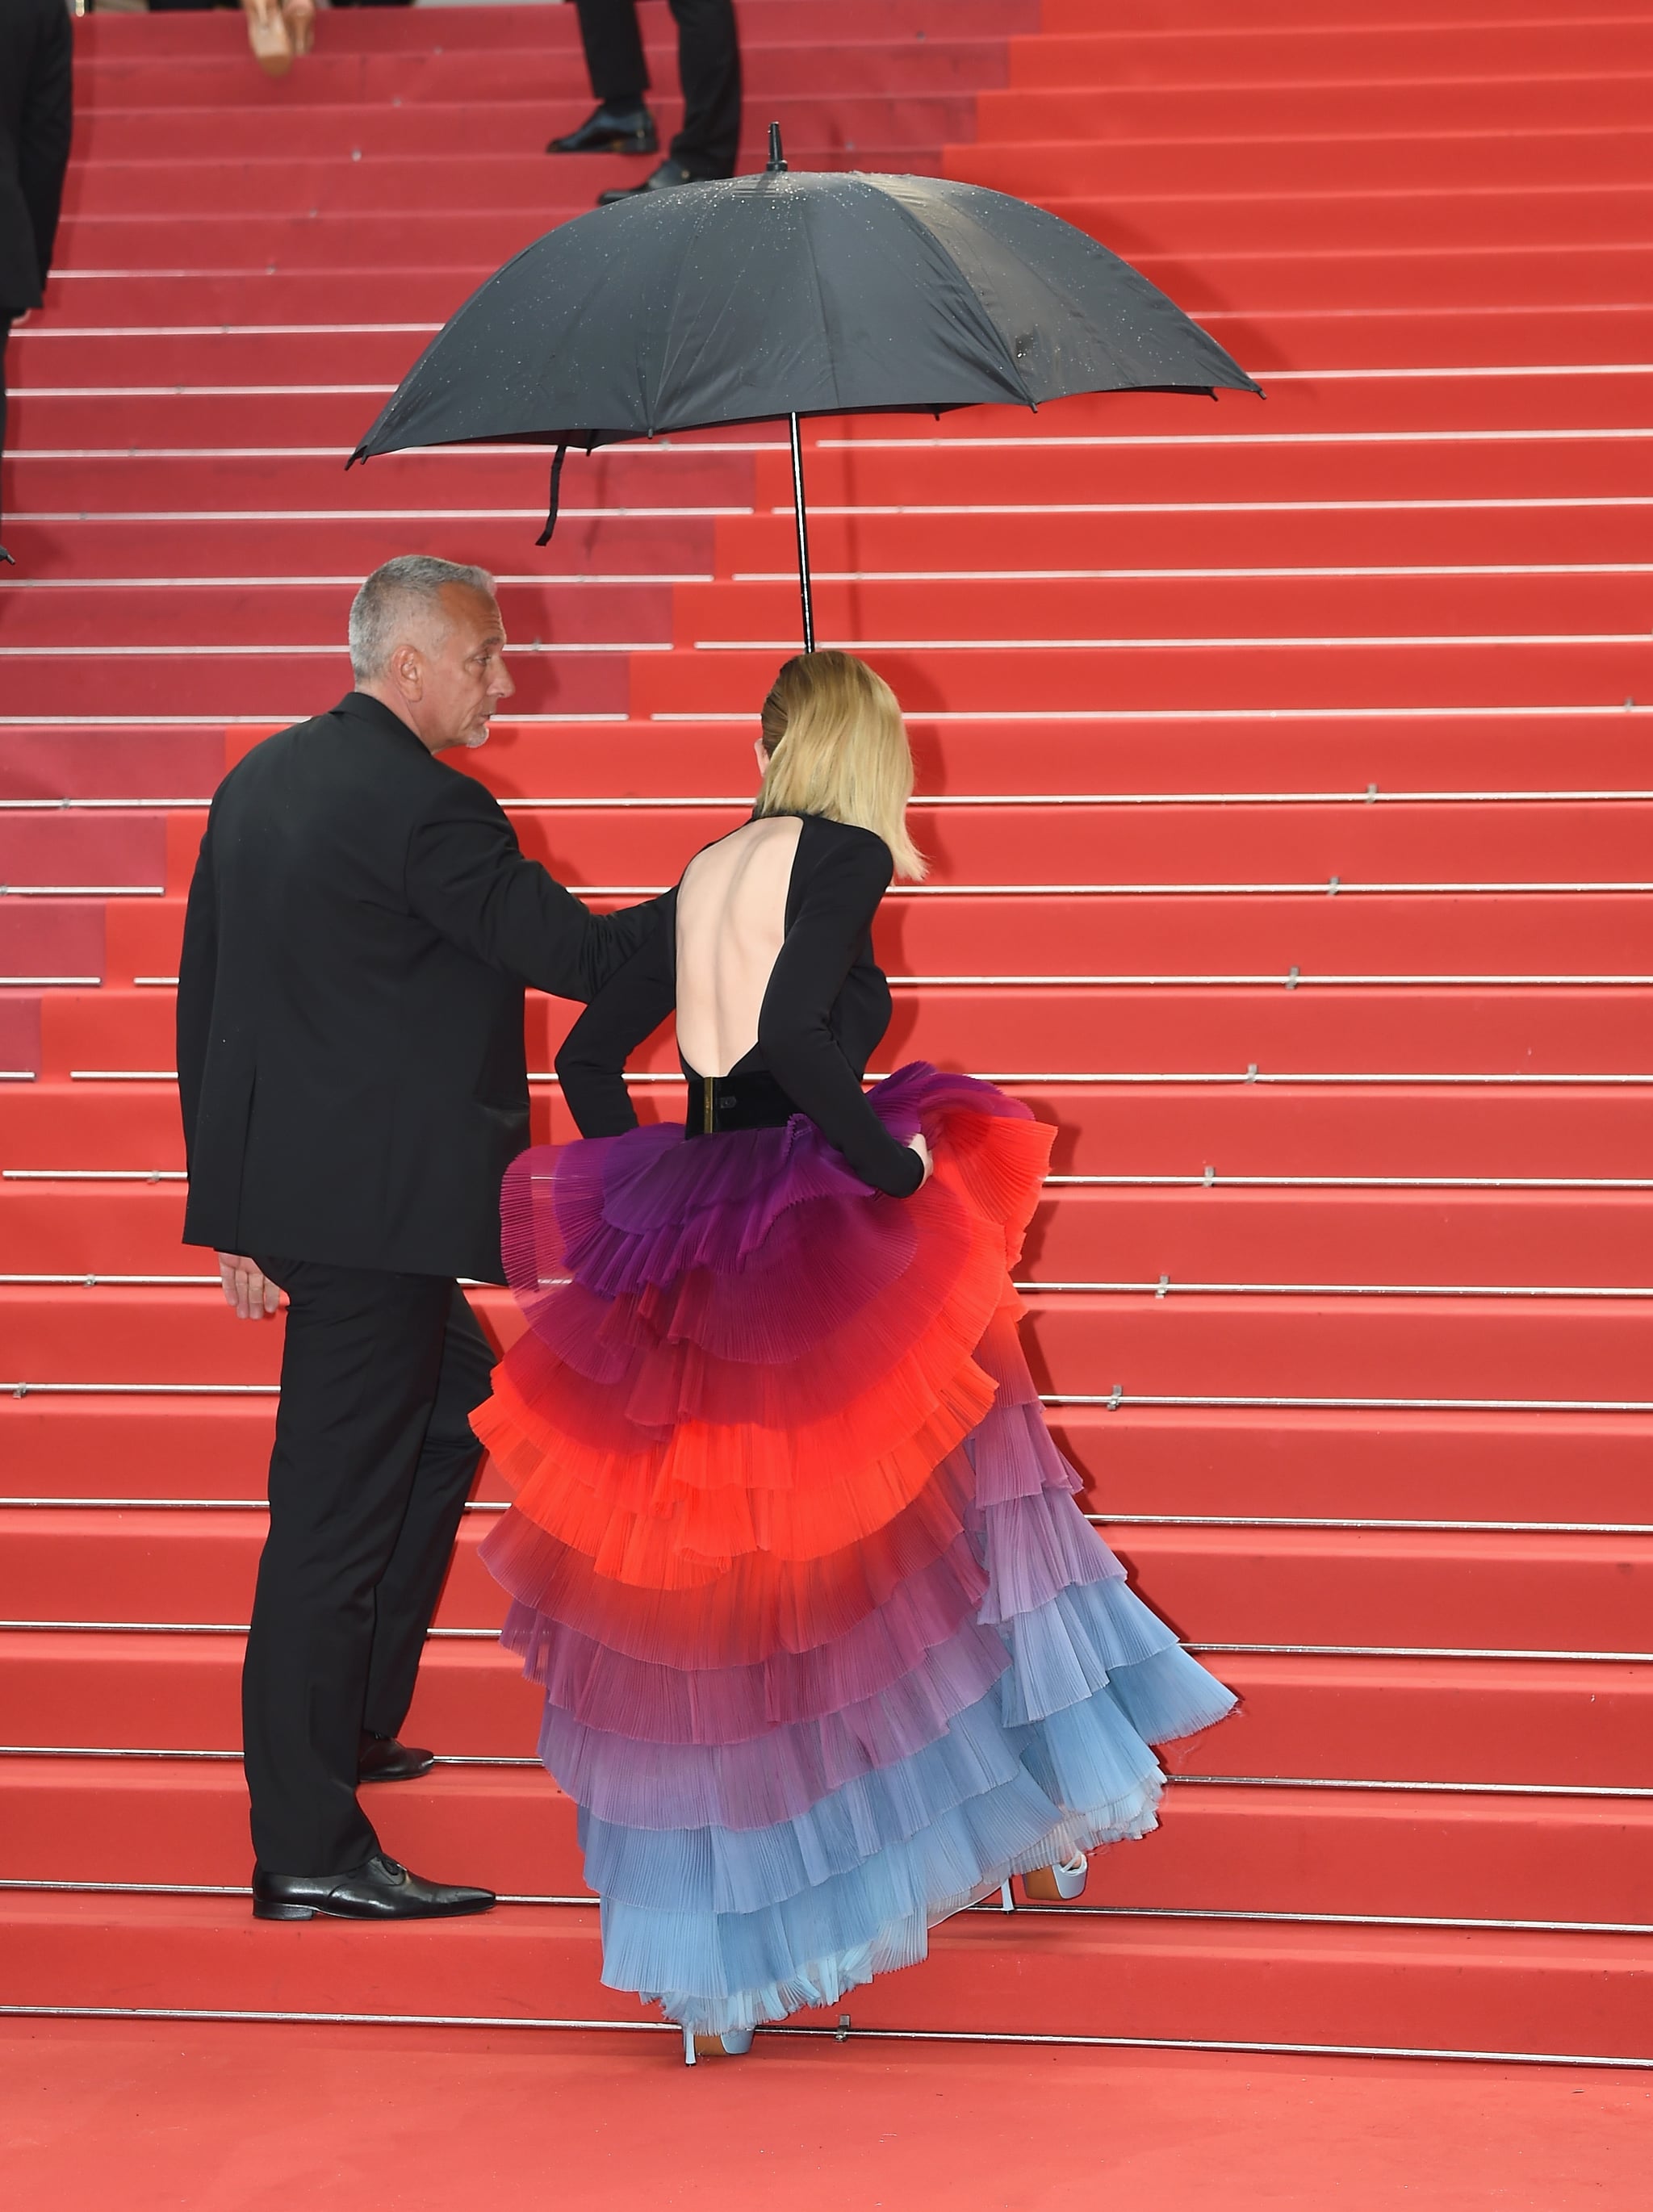 Cate Blanchett Rainbow Givenchy Dress Cannes 2018